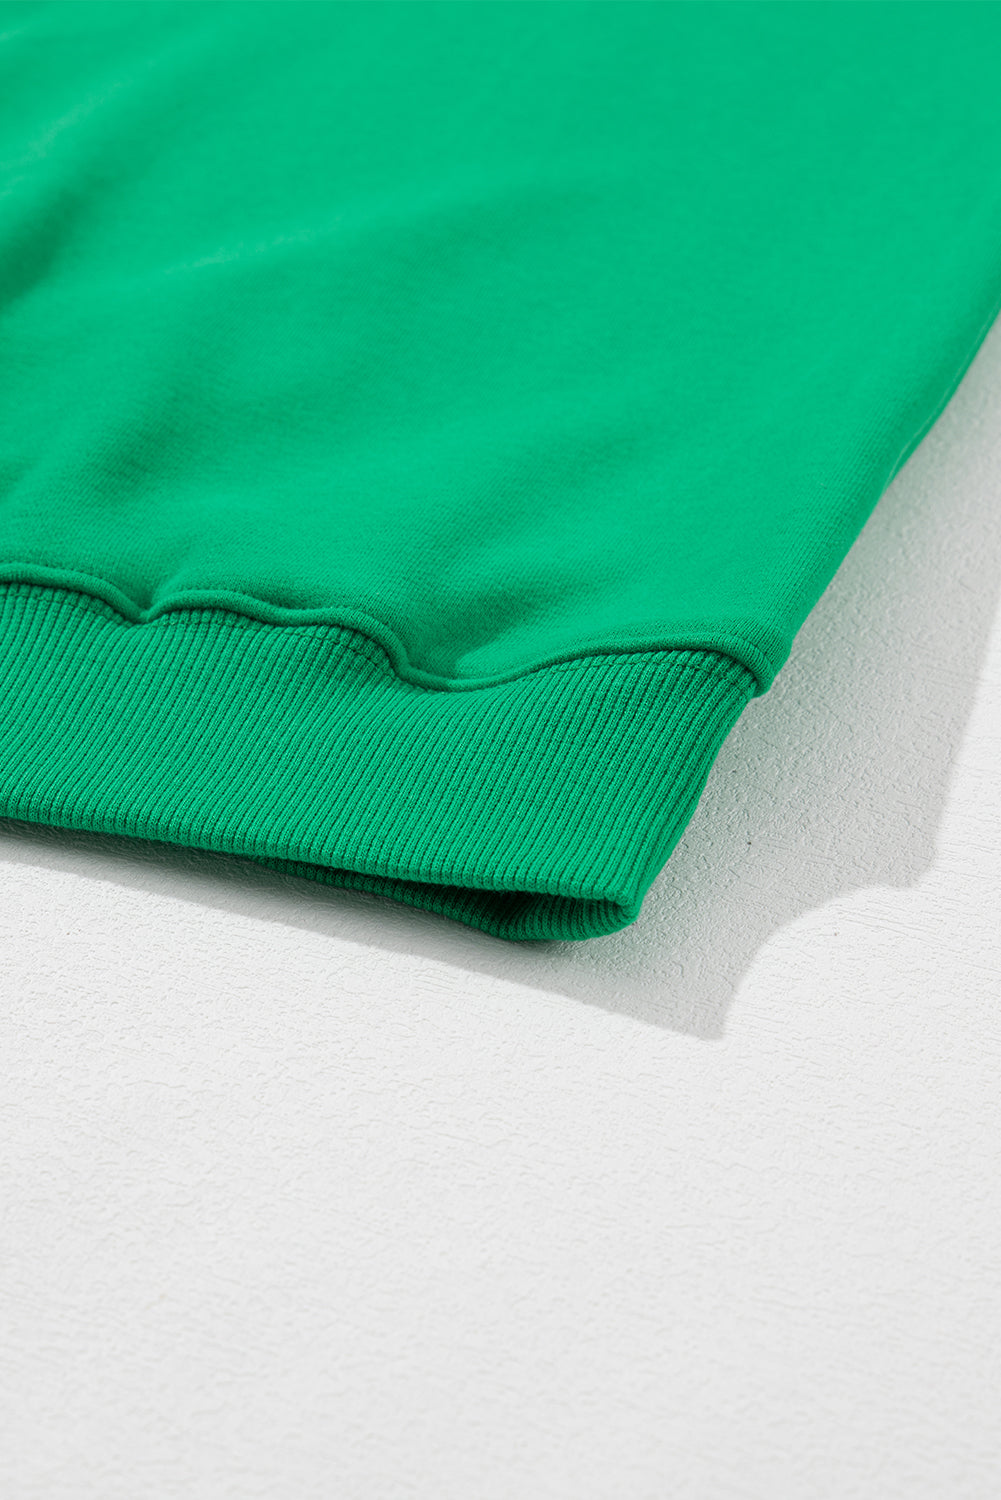 Grünes LUCKY Aphabet Chenille besticktes Pullover-Sweatshirt